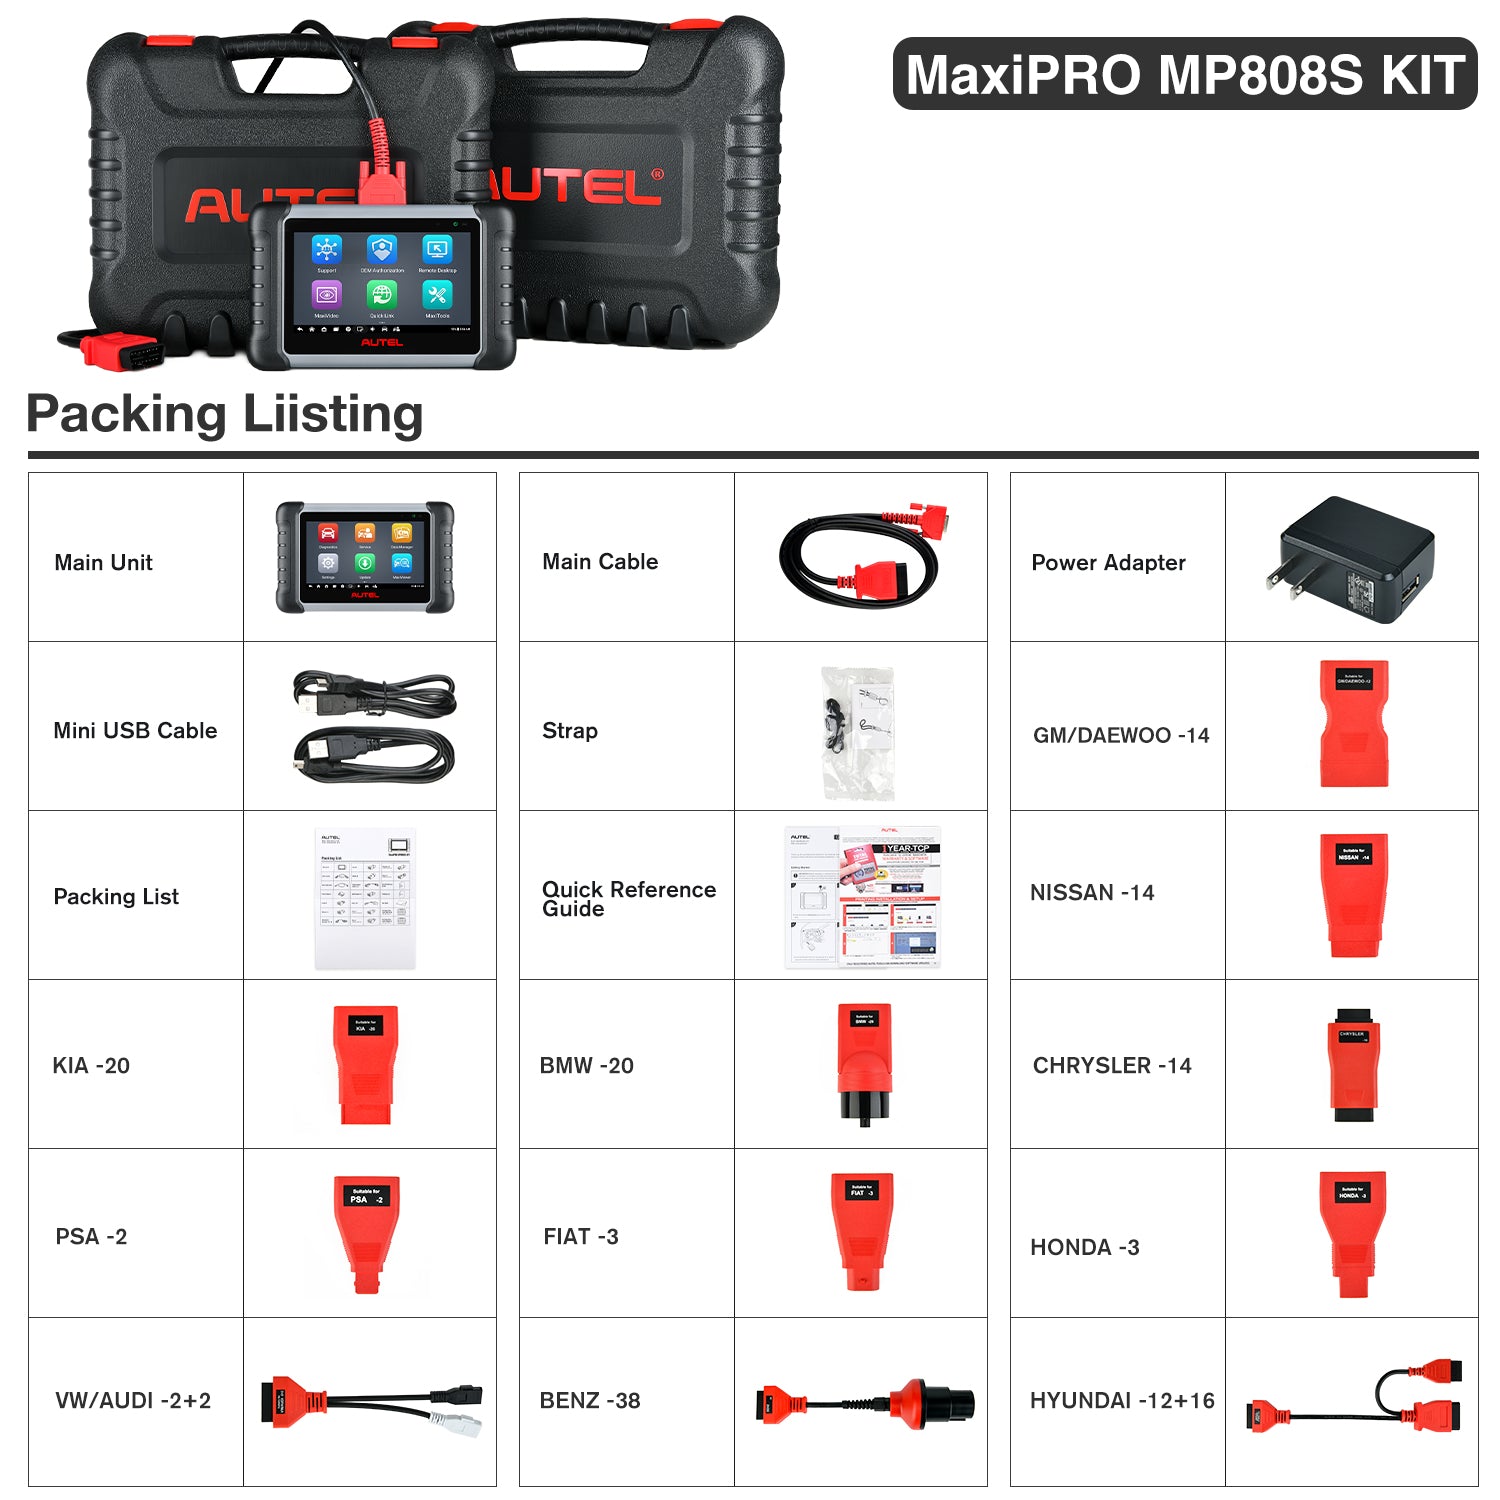 MaxiPRO MP808S KIT